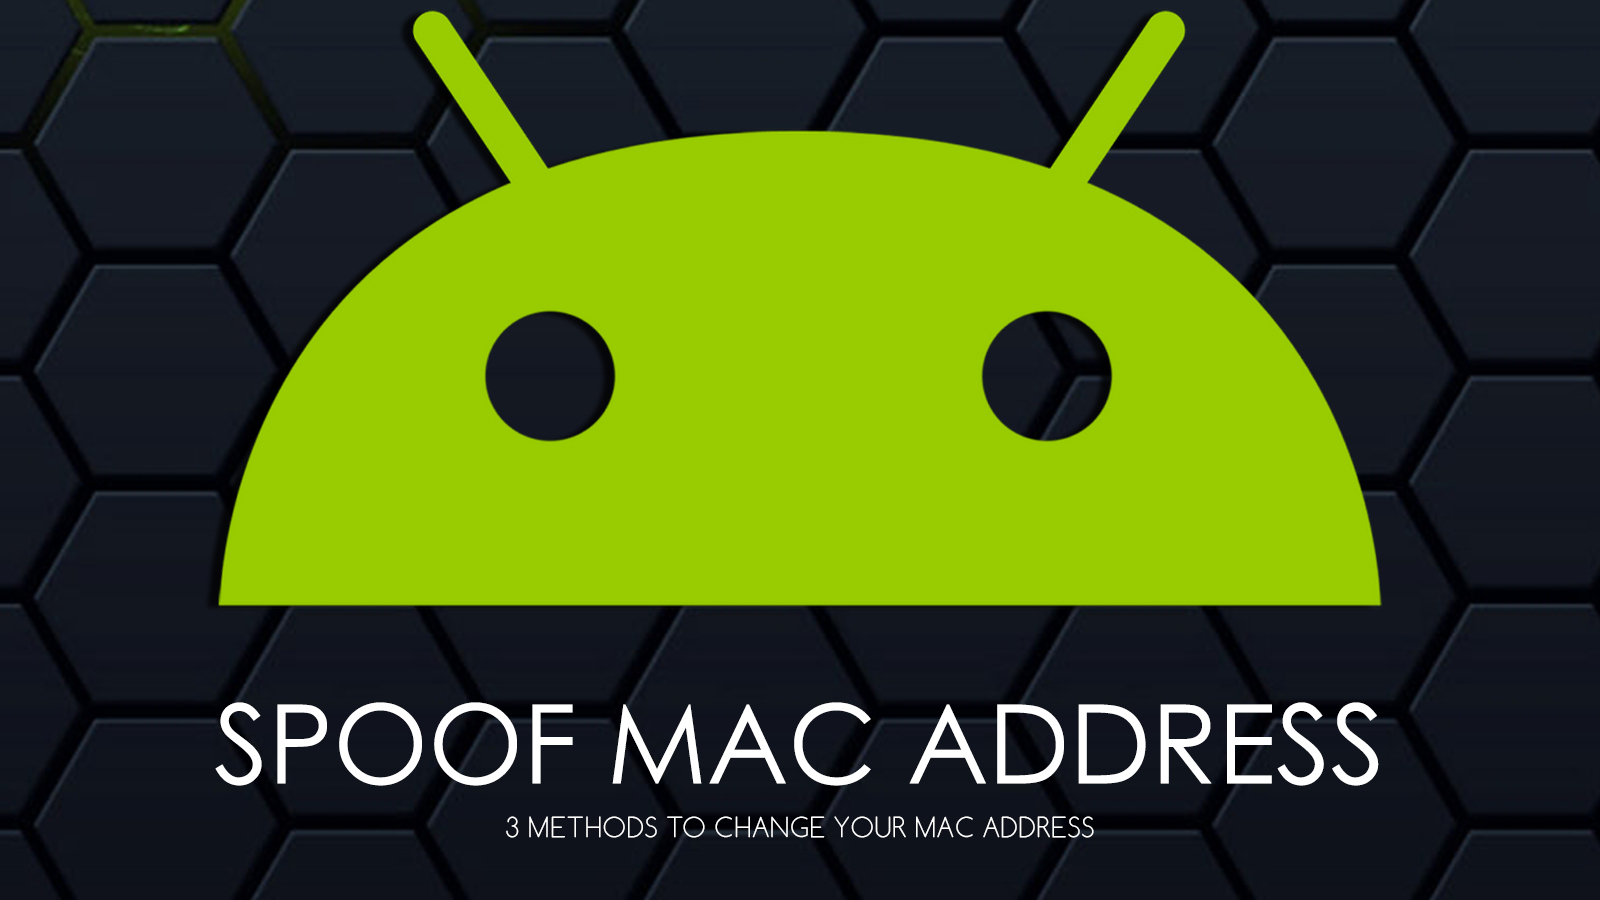 Spoof mac address ios app download